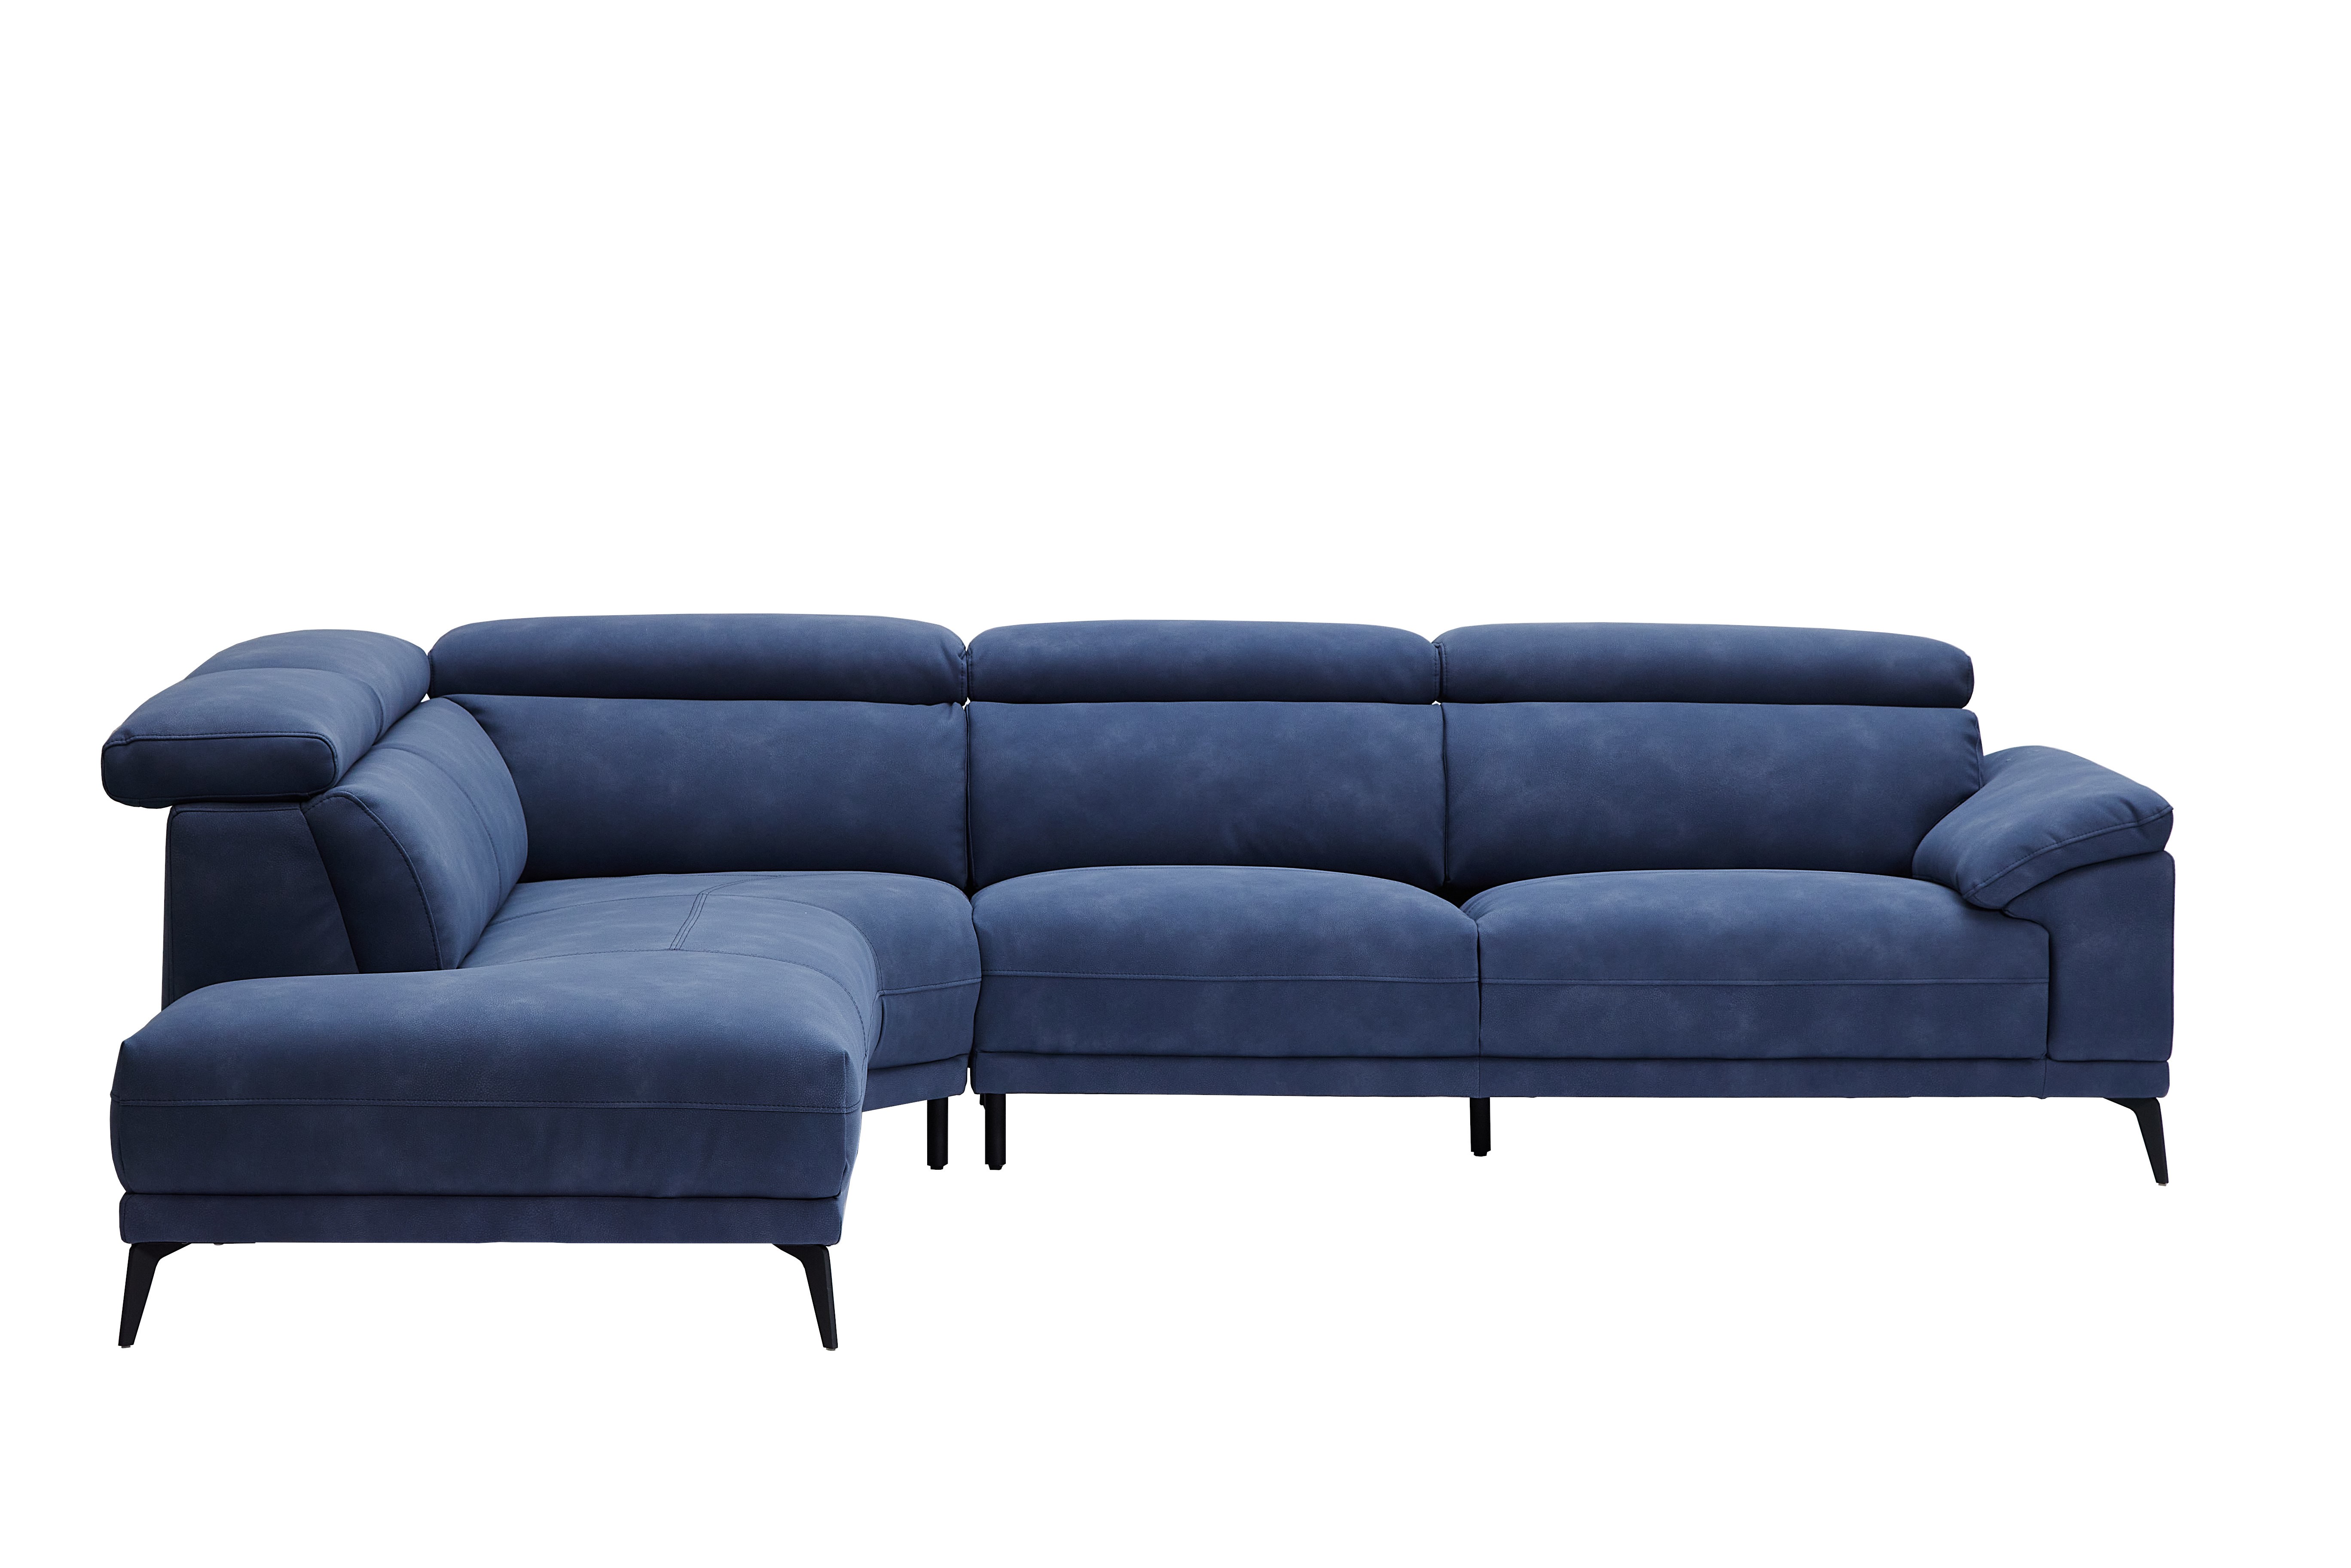 montero futon sofa sleeper bed multiple colors